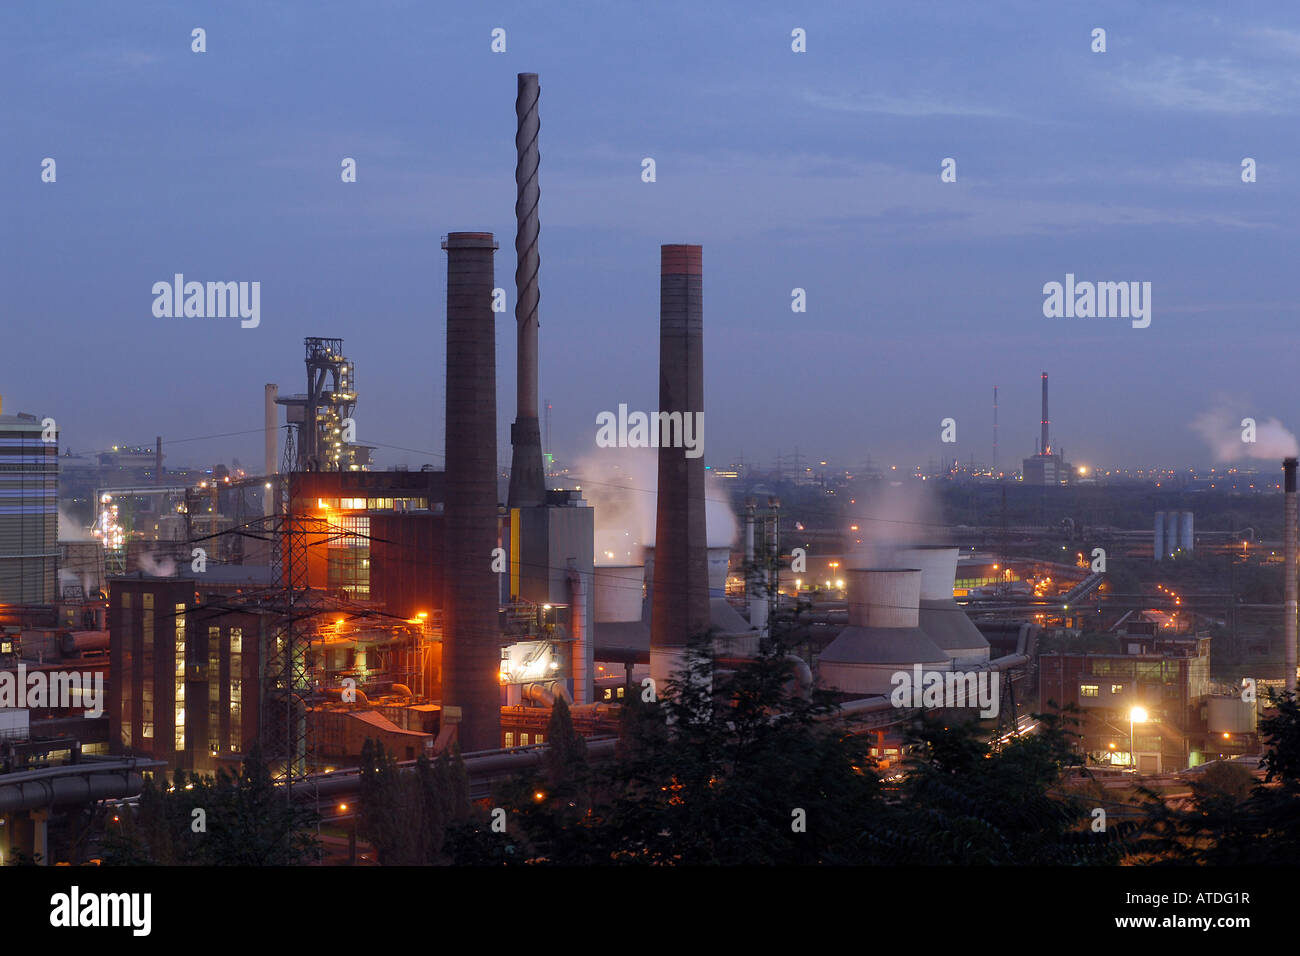 ThyssenKrupp smelting works in Duisburg, Germany Stock Photo